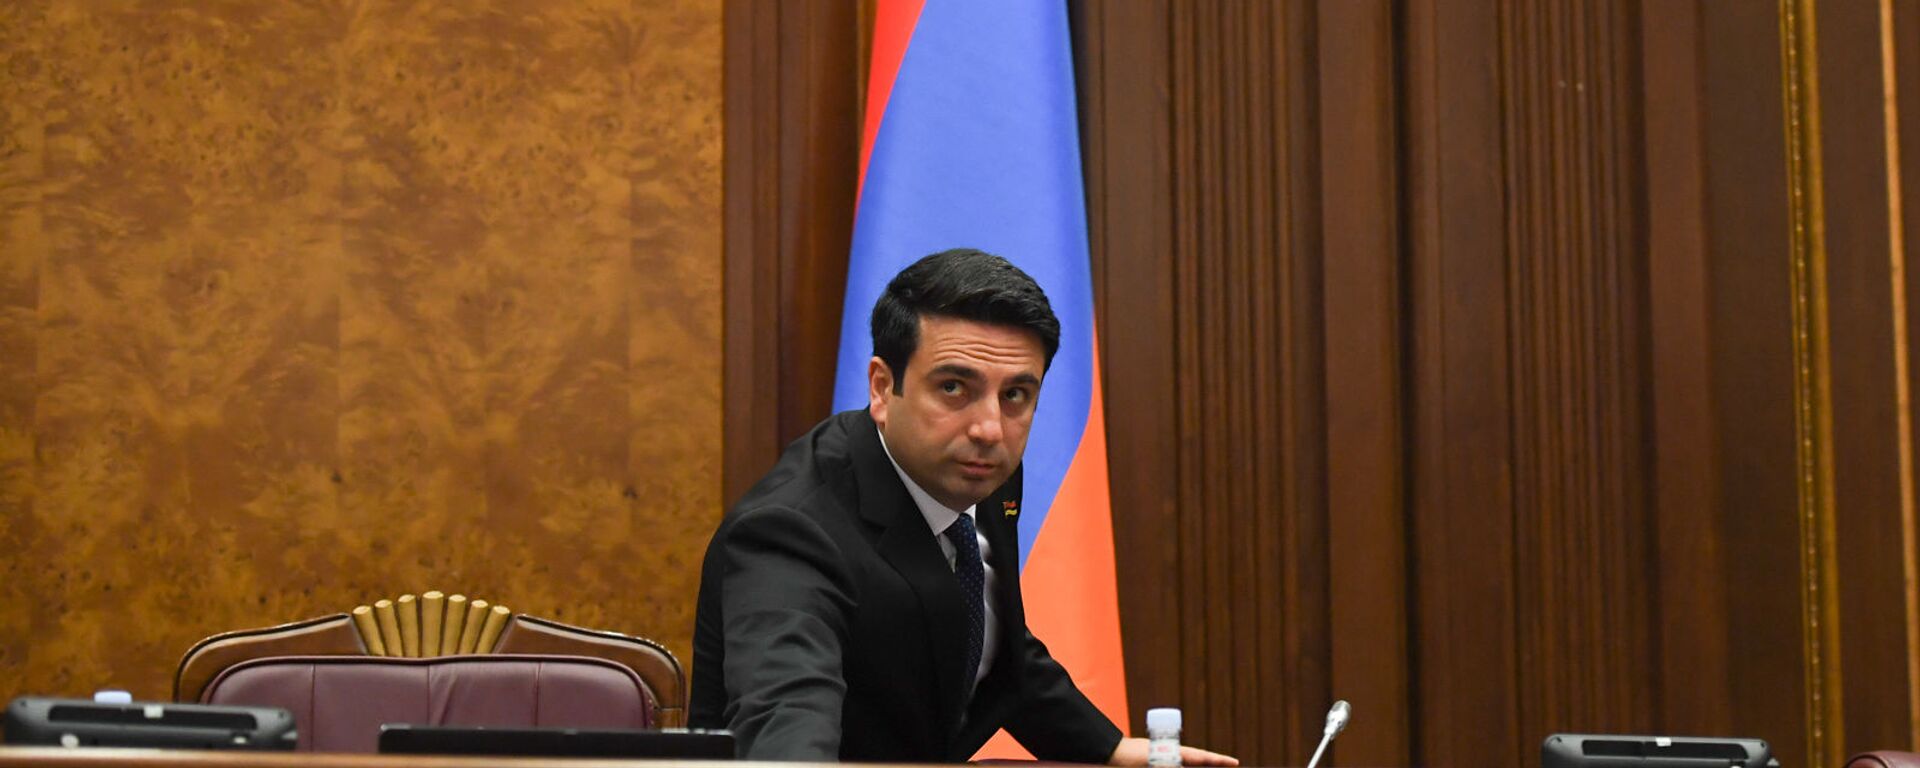 Ален Симонян во время заседания НС (13 сентября 2021). Еревaн - Sputnik Армения, 1920, 22.12.2021